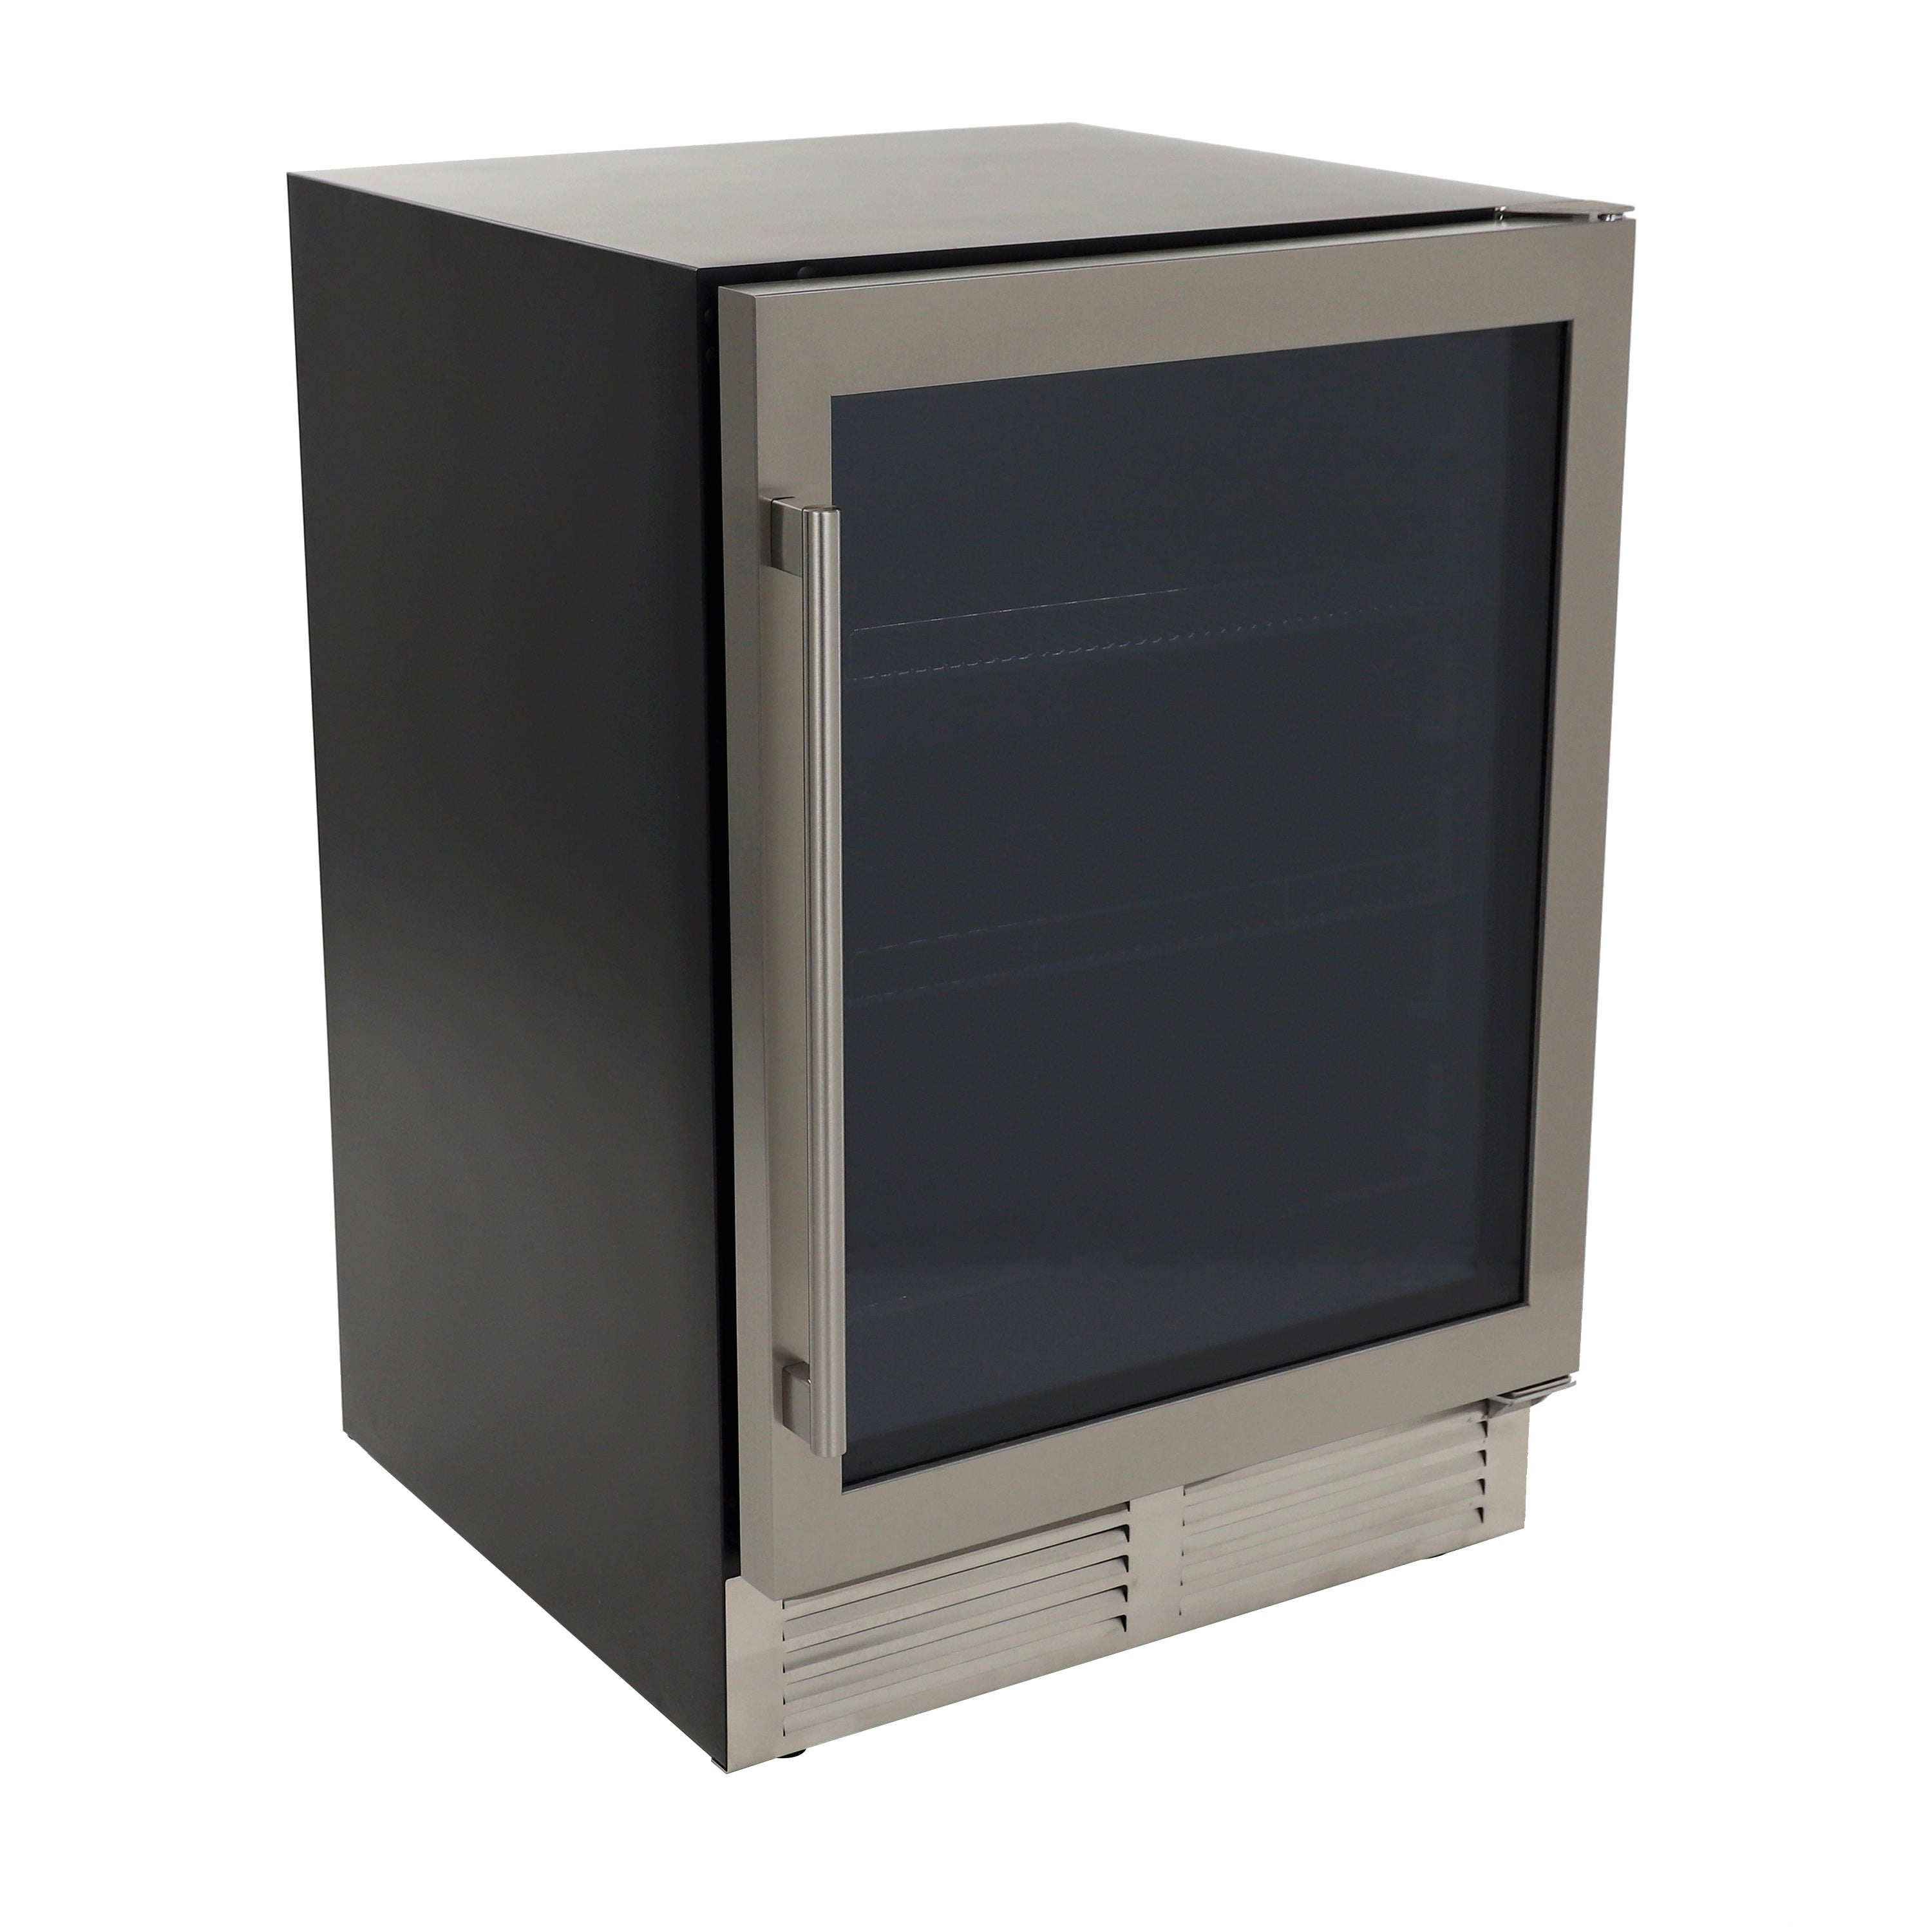 Avanti - BCD50Z3S, Avanti DESIGNER Series Beverage Center, 126 Can Capacity, in Stainless Steel with Black Cabinet